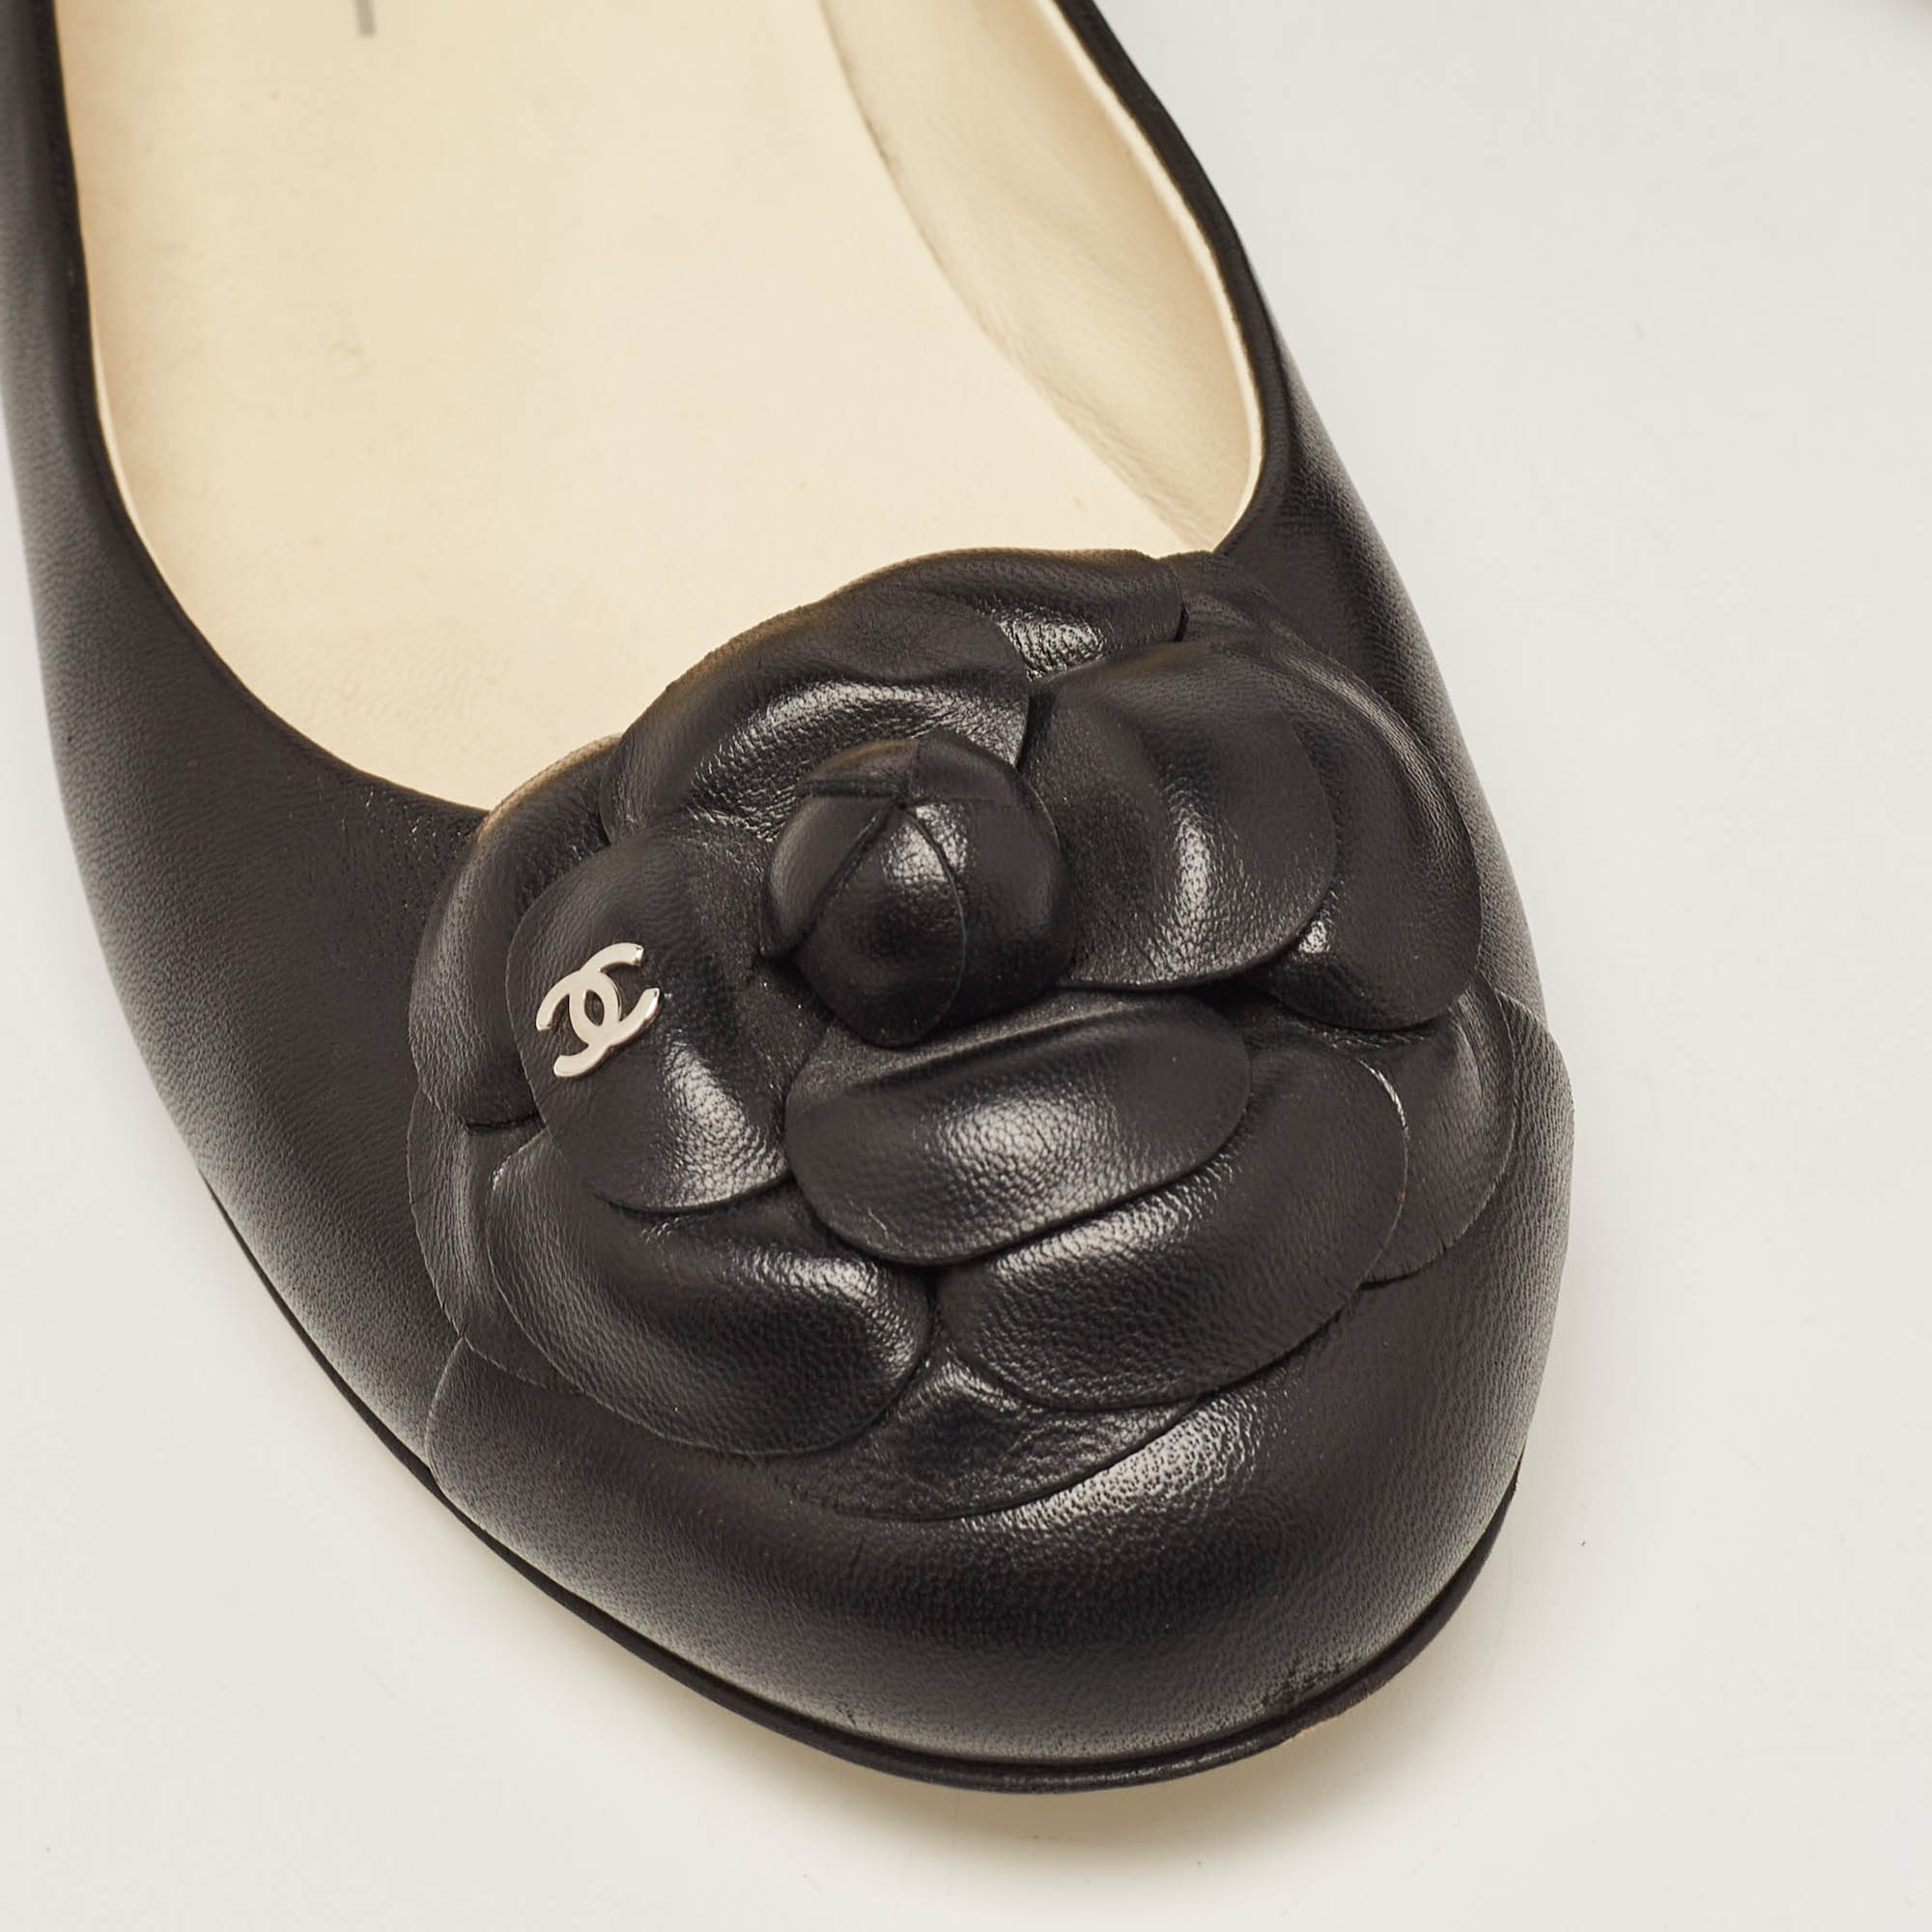 Chanel Black Leather Camelia Ballet Flats Size 39.5